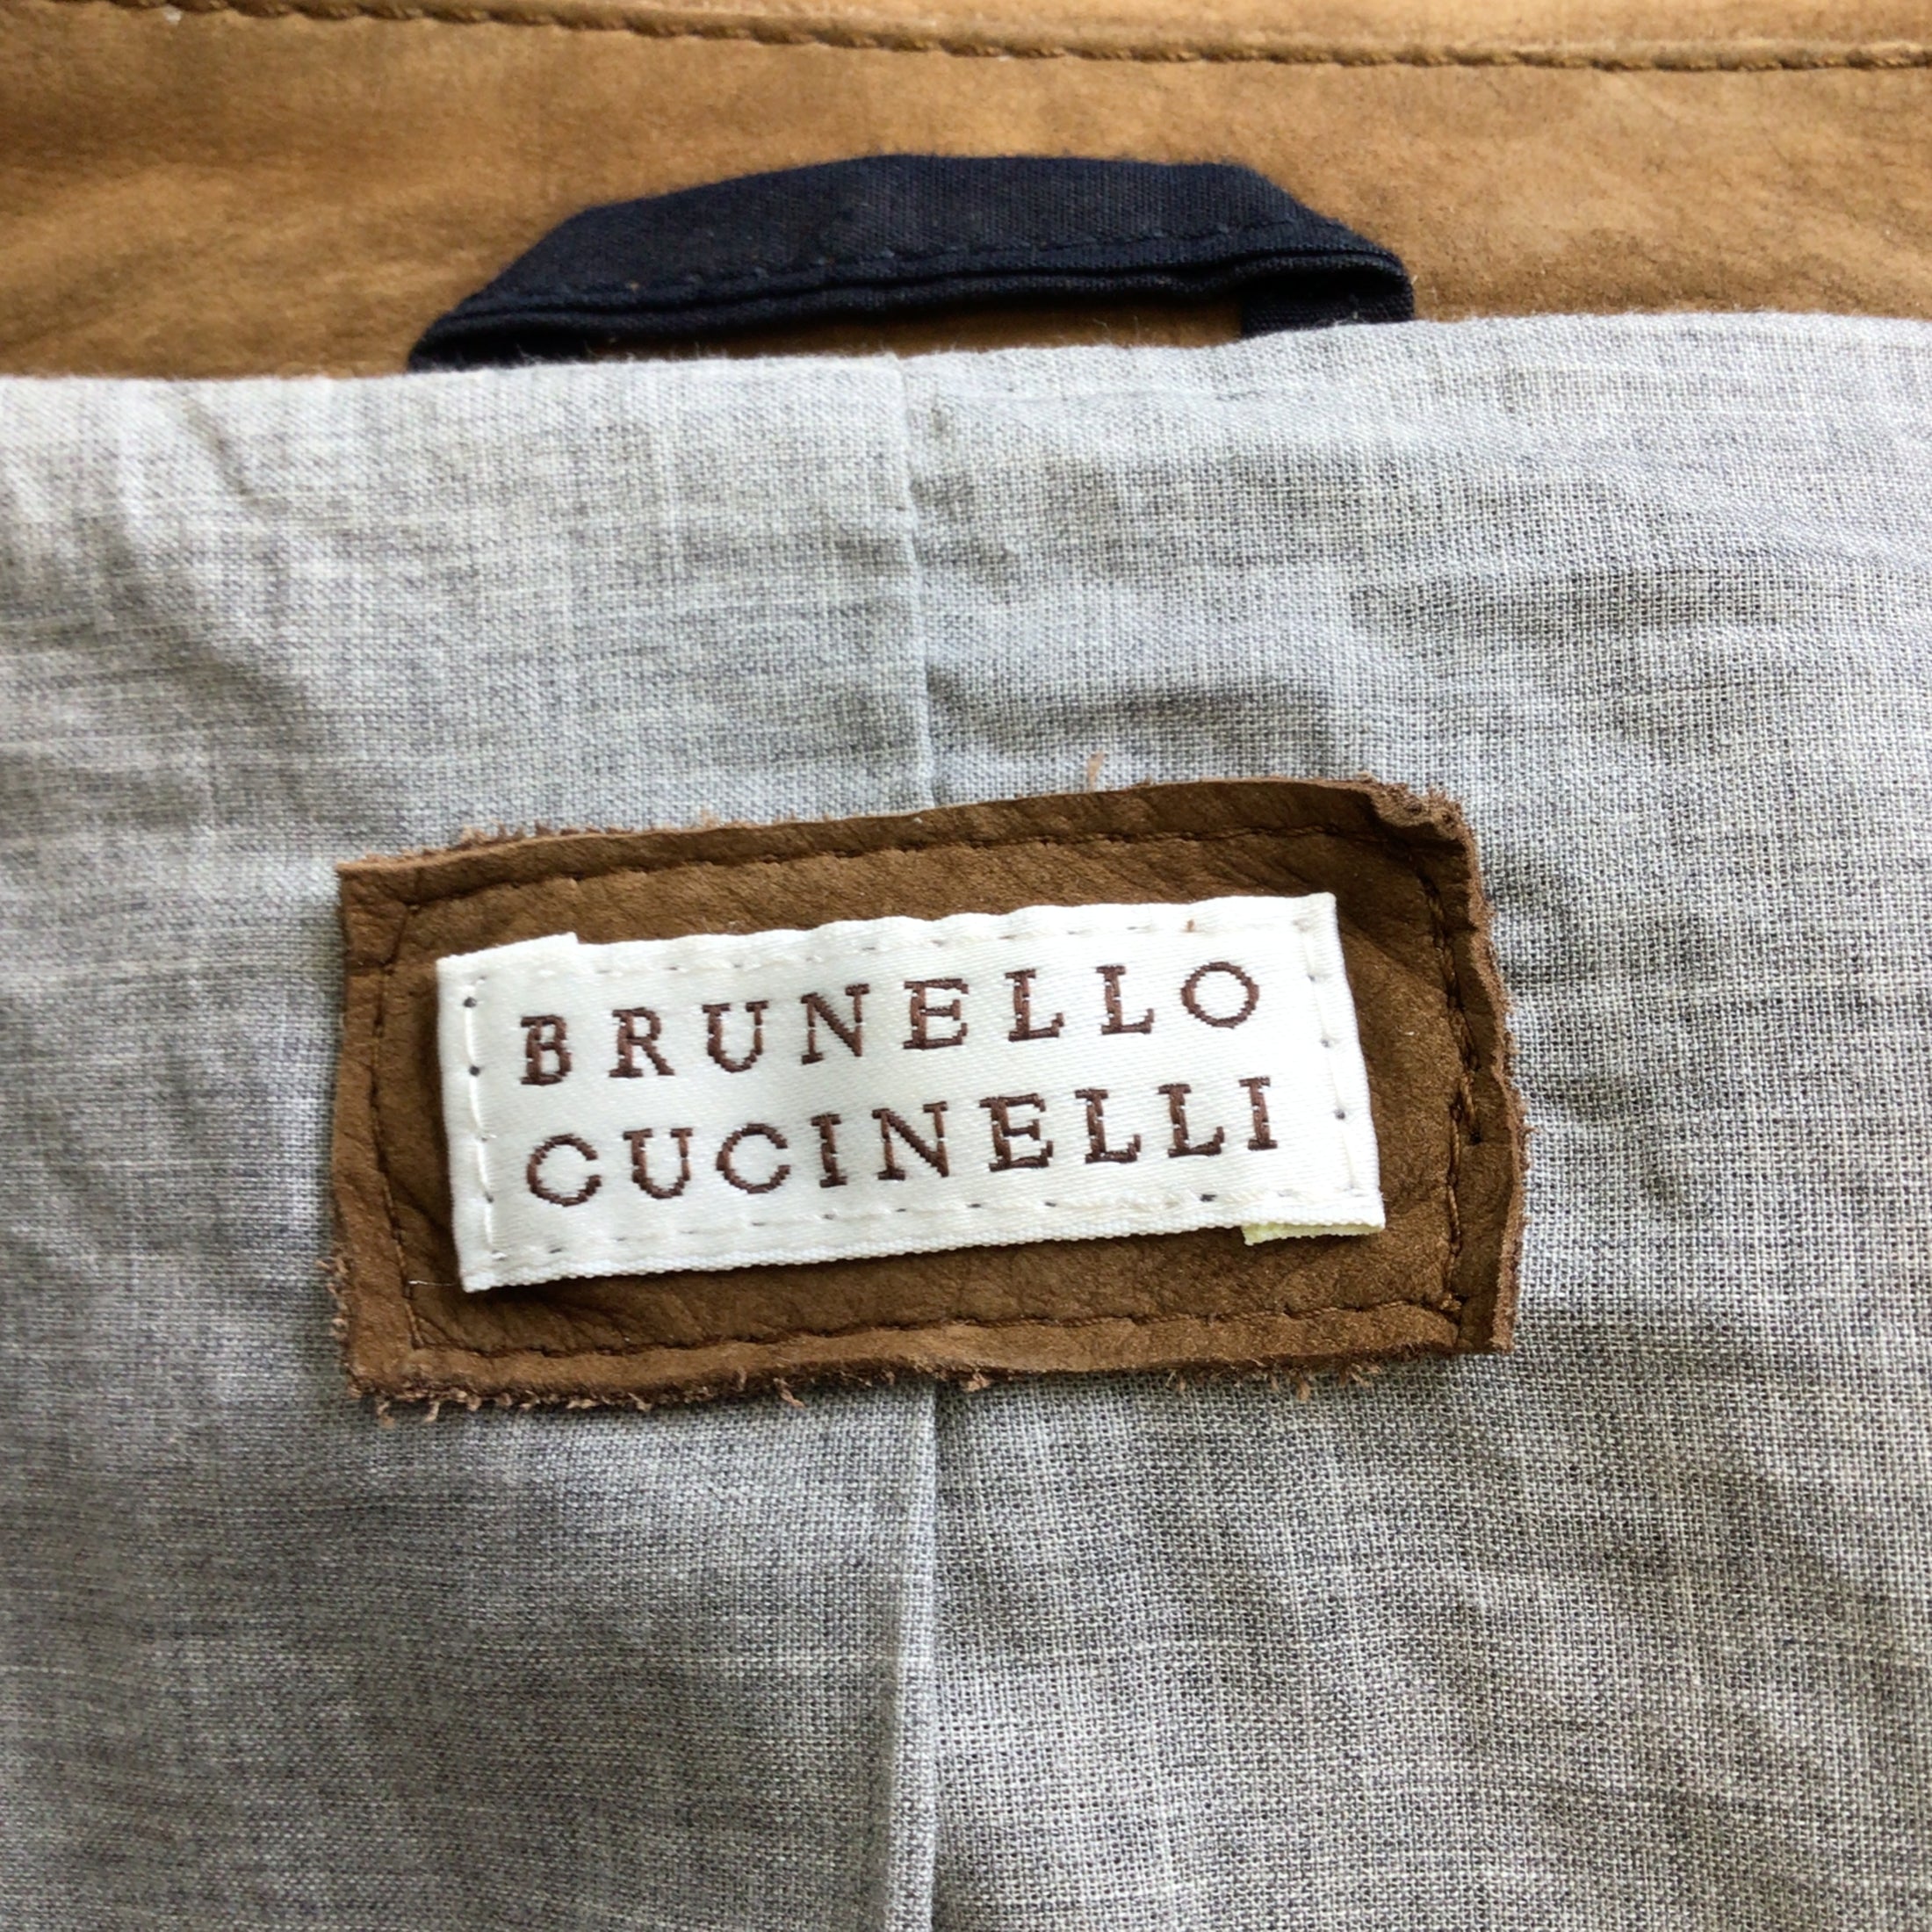 Brunello Cucinelli Men's Brown Button-Front Suede Leather Jacket